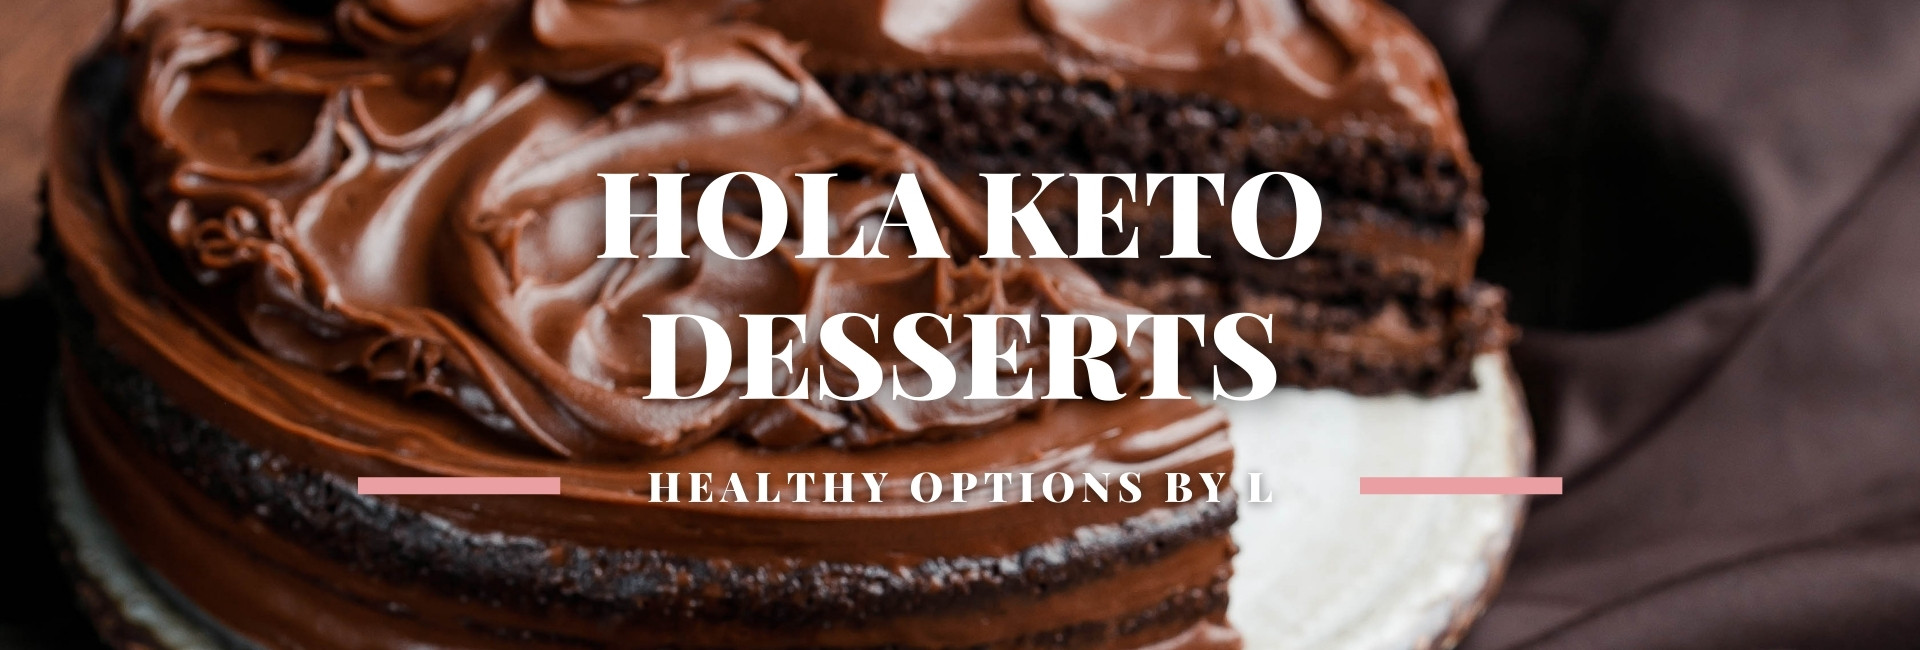 Hola Keto Desserts Dubai by Healthy Options by L UAE